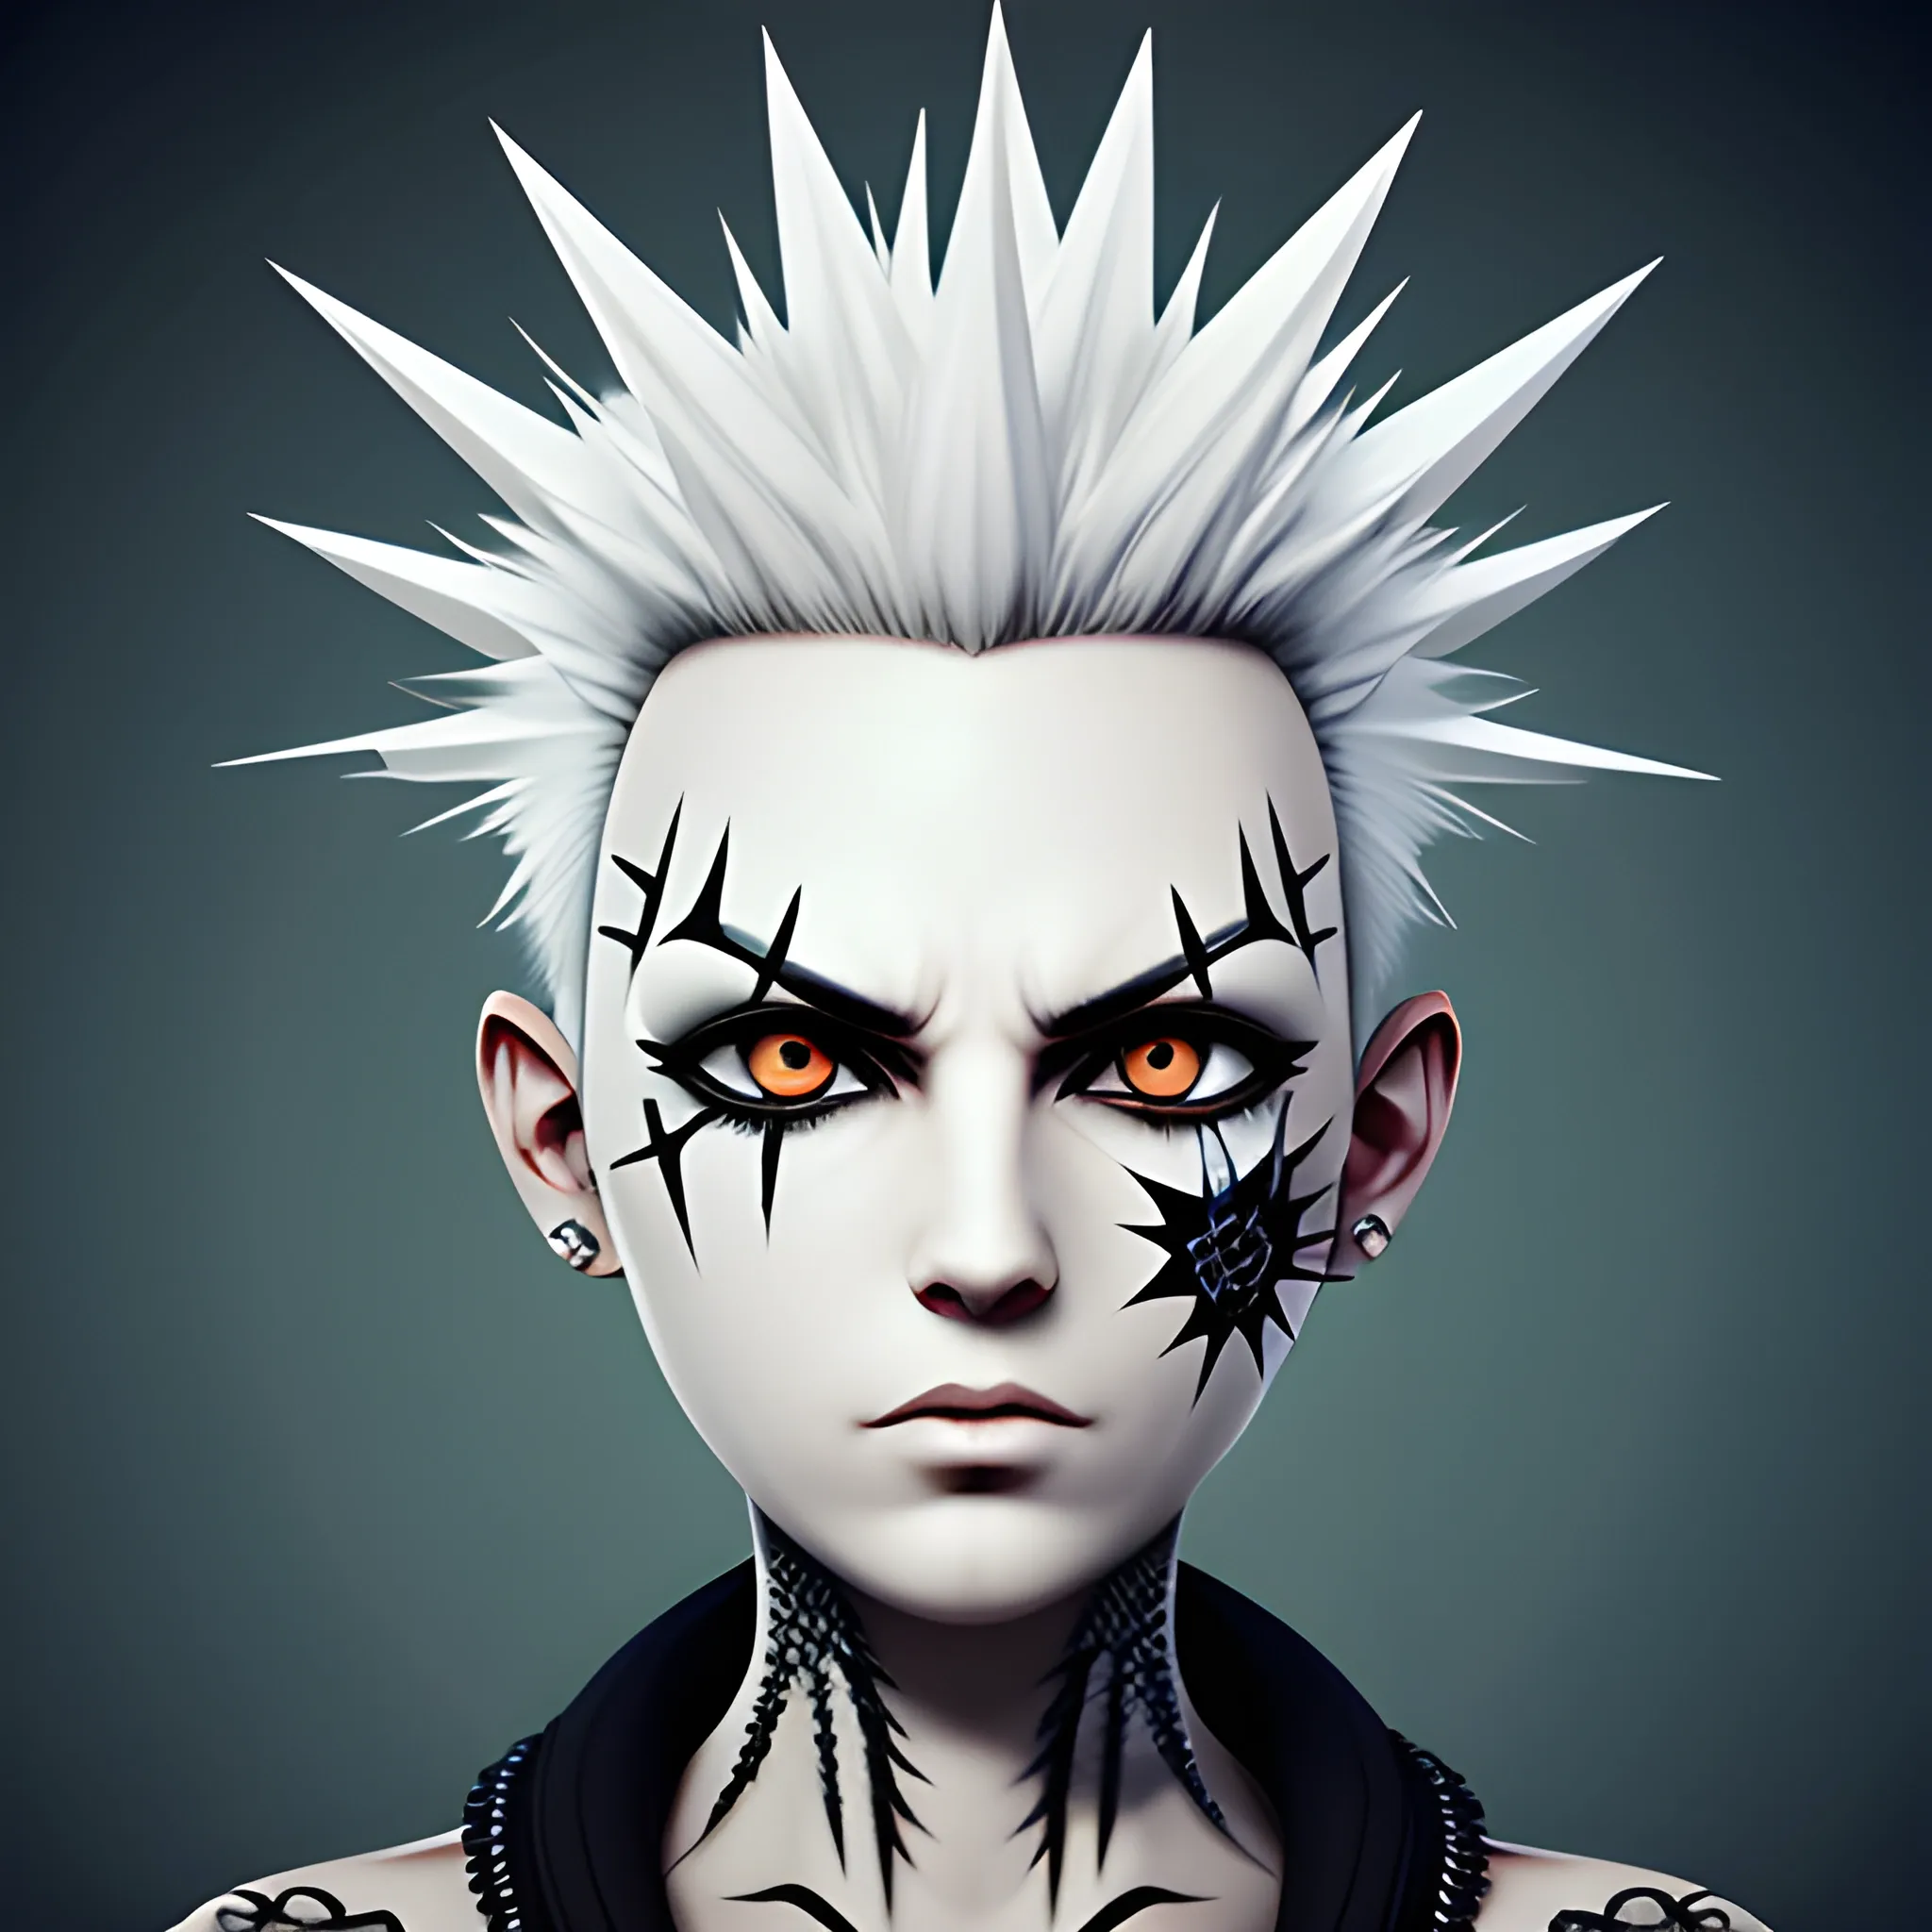 Spiky Head Punk White Character, Eye Shape of Plus Symbol, realistic